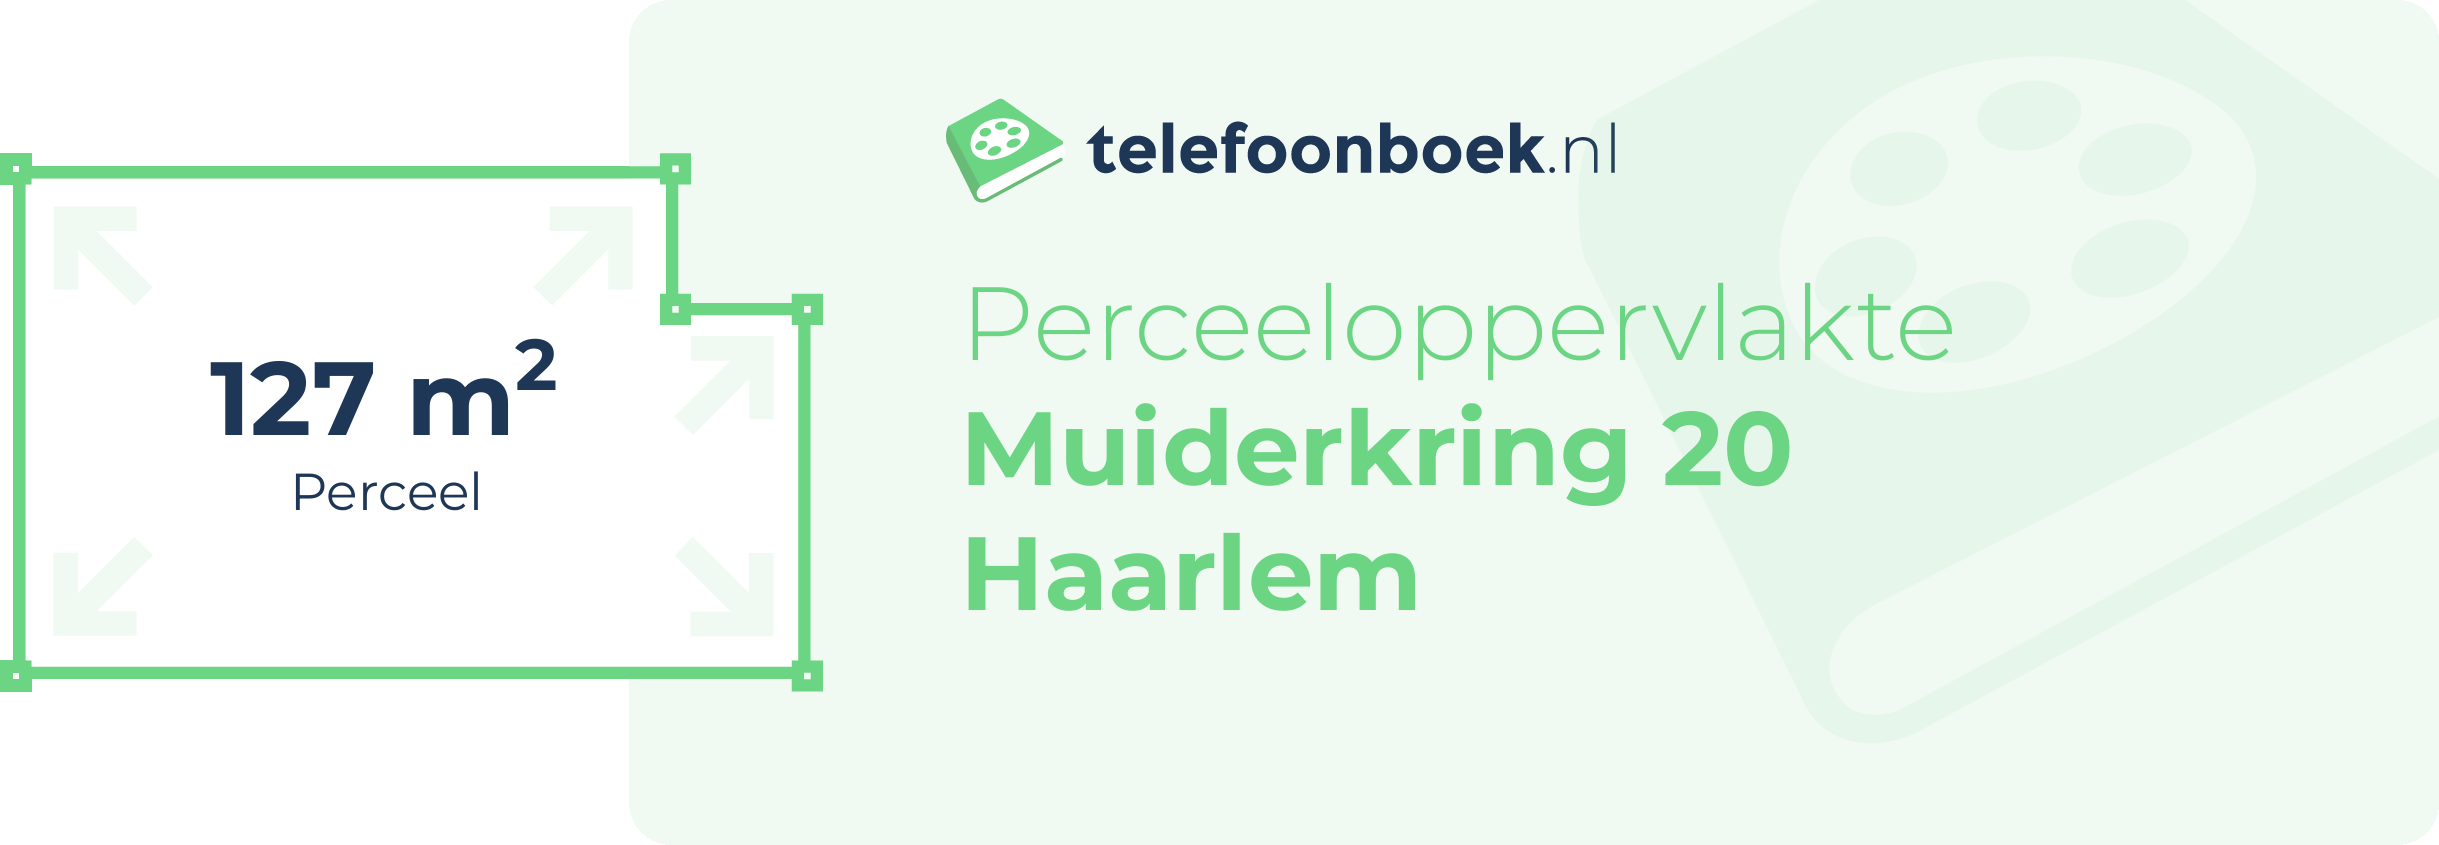 Perceeloppervlakte Muiderkring 20 Haarlem